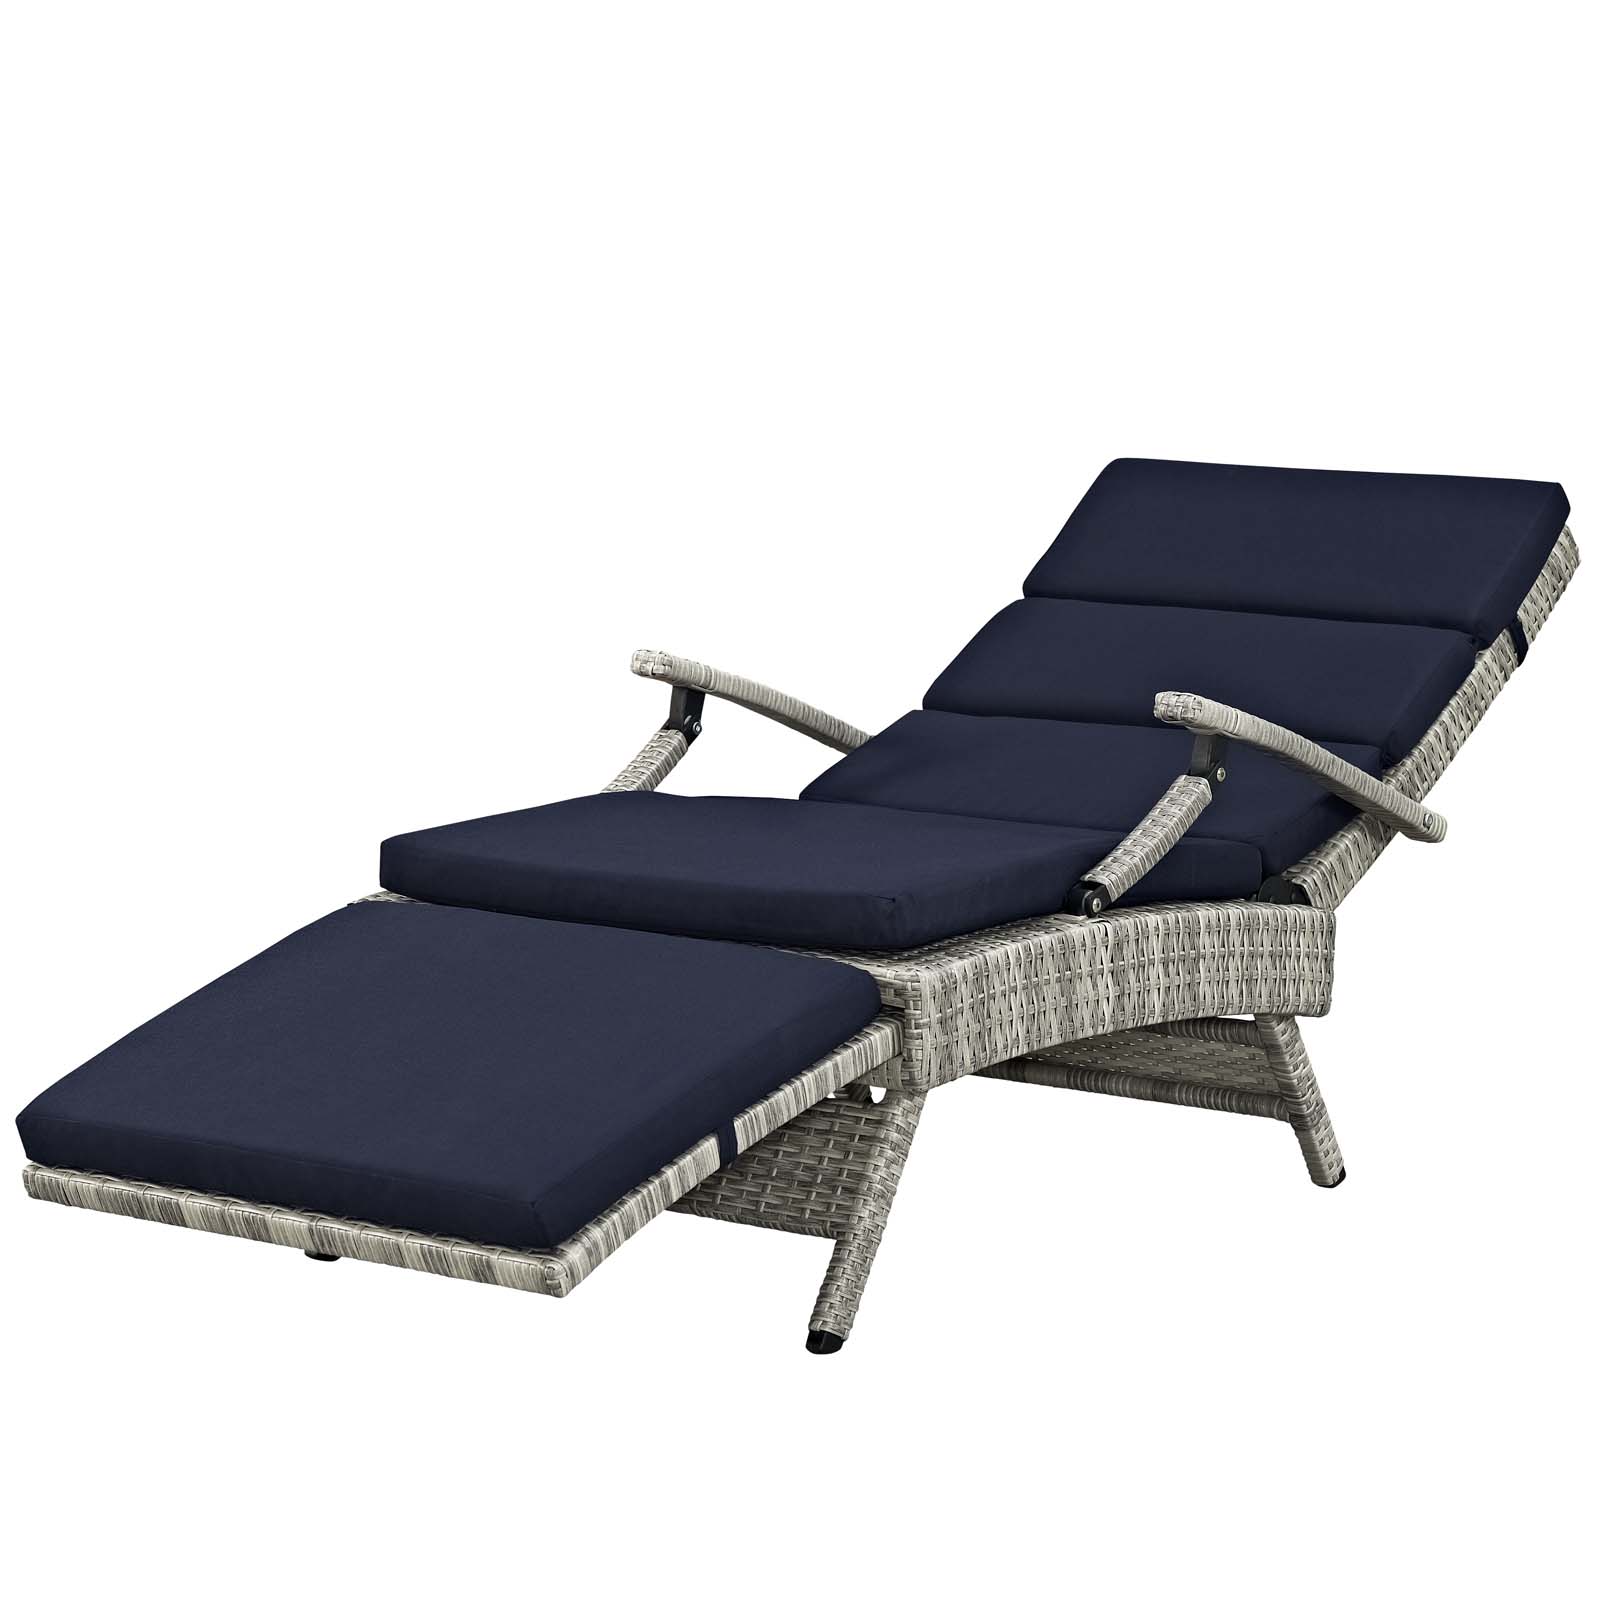 Contemporary Modern Urban Designer Outdoor Patio Balcony Garden Furniture Lounge Chair Chaise, Fabric Rattan Wicker, Navy Blue - image 5 of 9